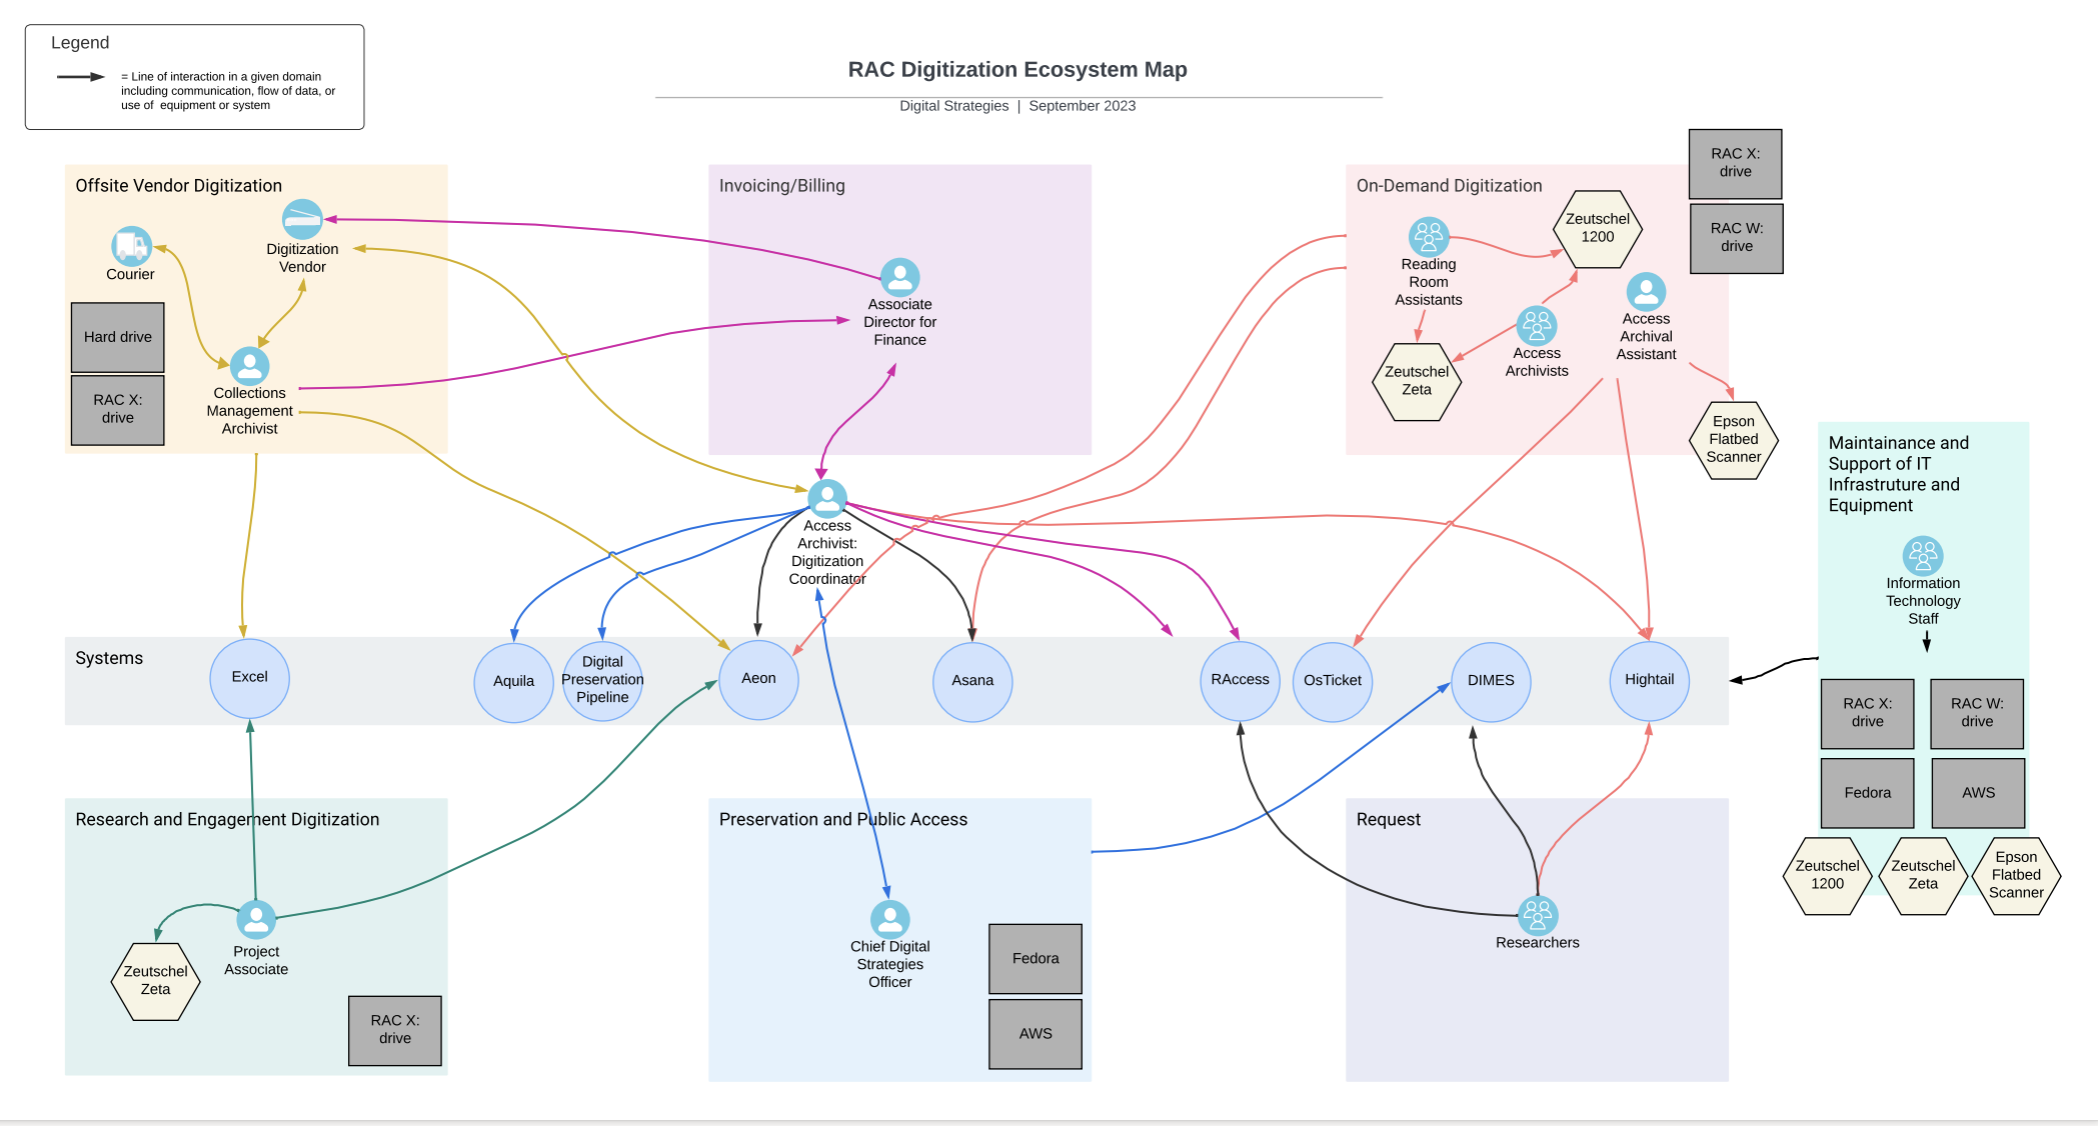 Figure 2. RAC digitization ecosystem map.